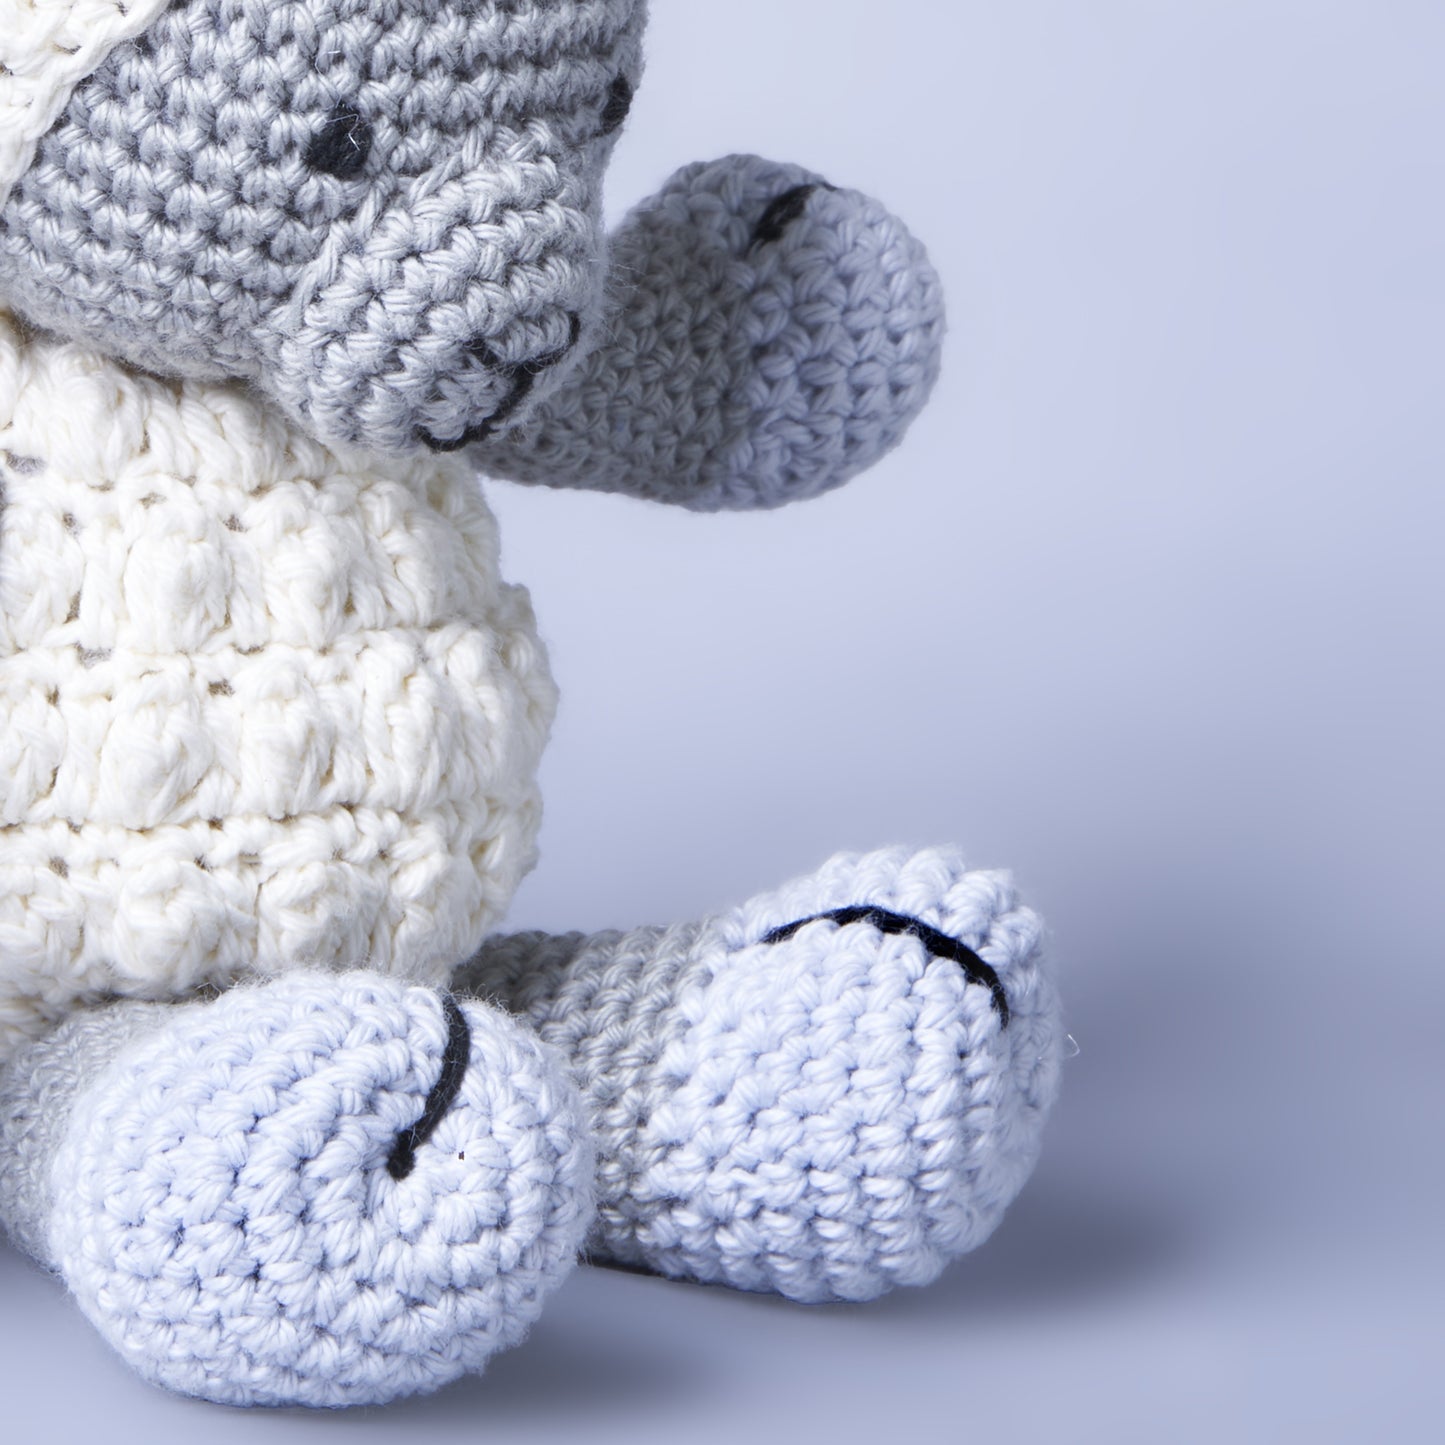 Shank the sheep crochet toy